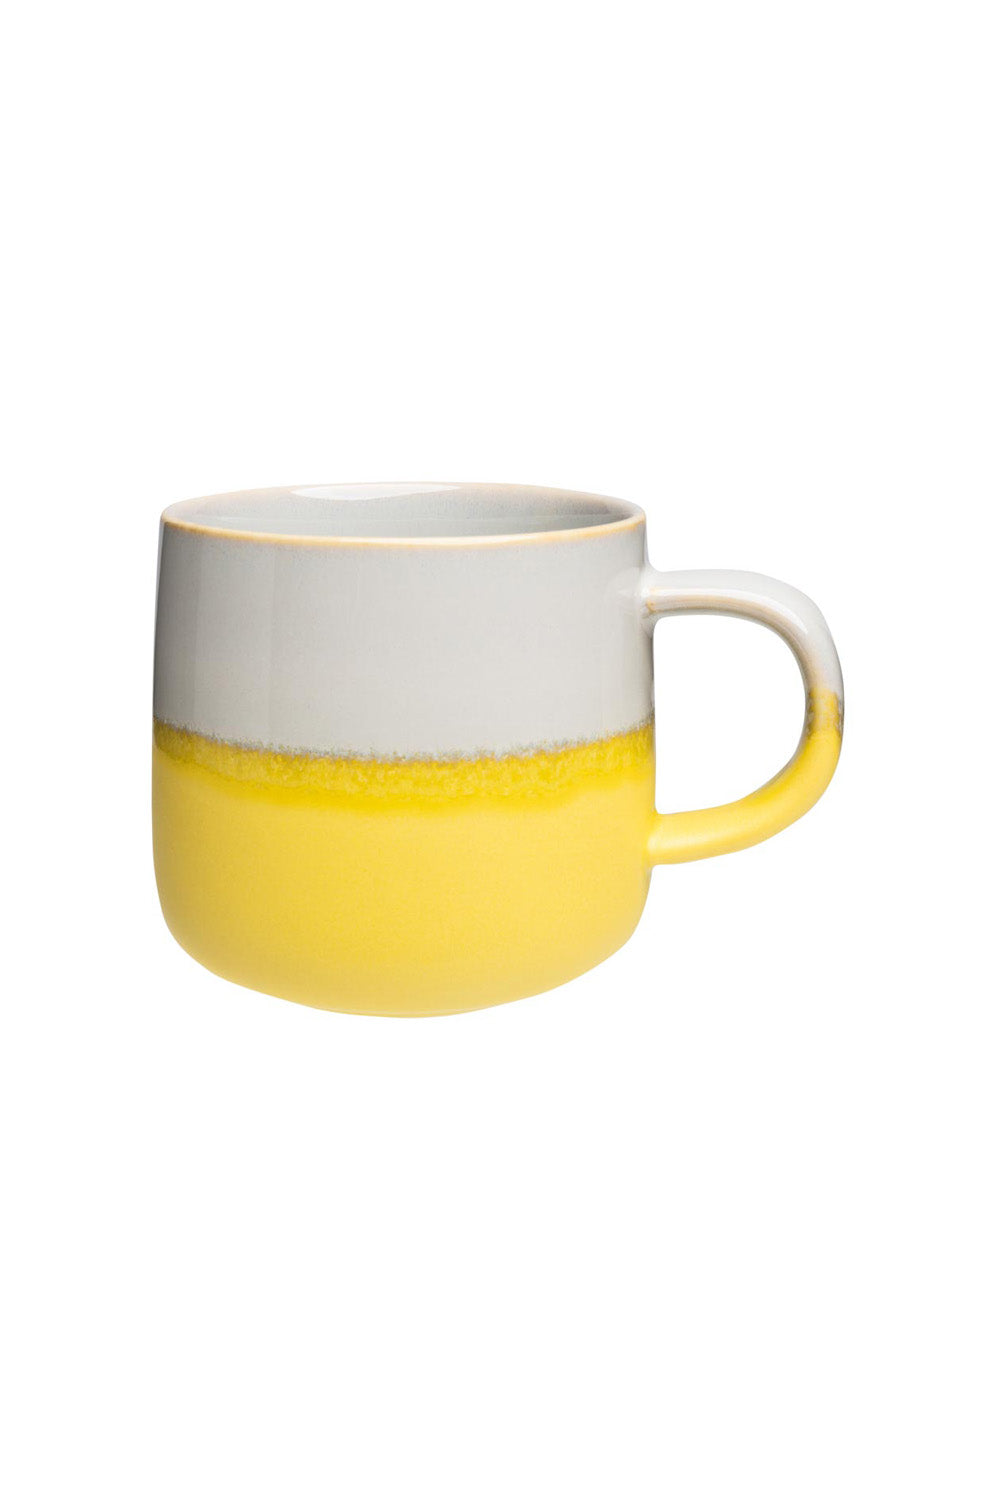 Industrial Mug in Yellow